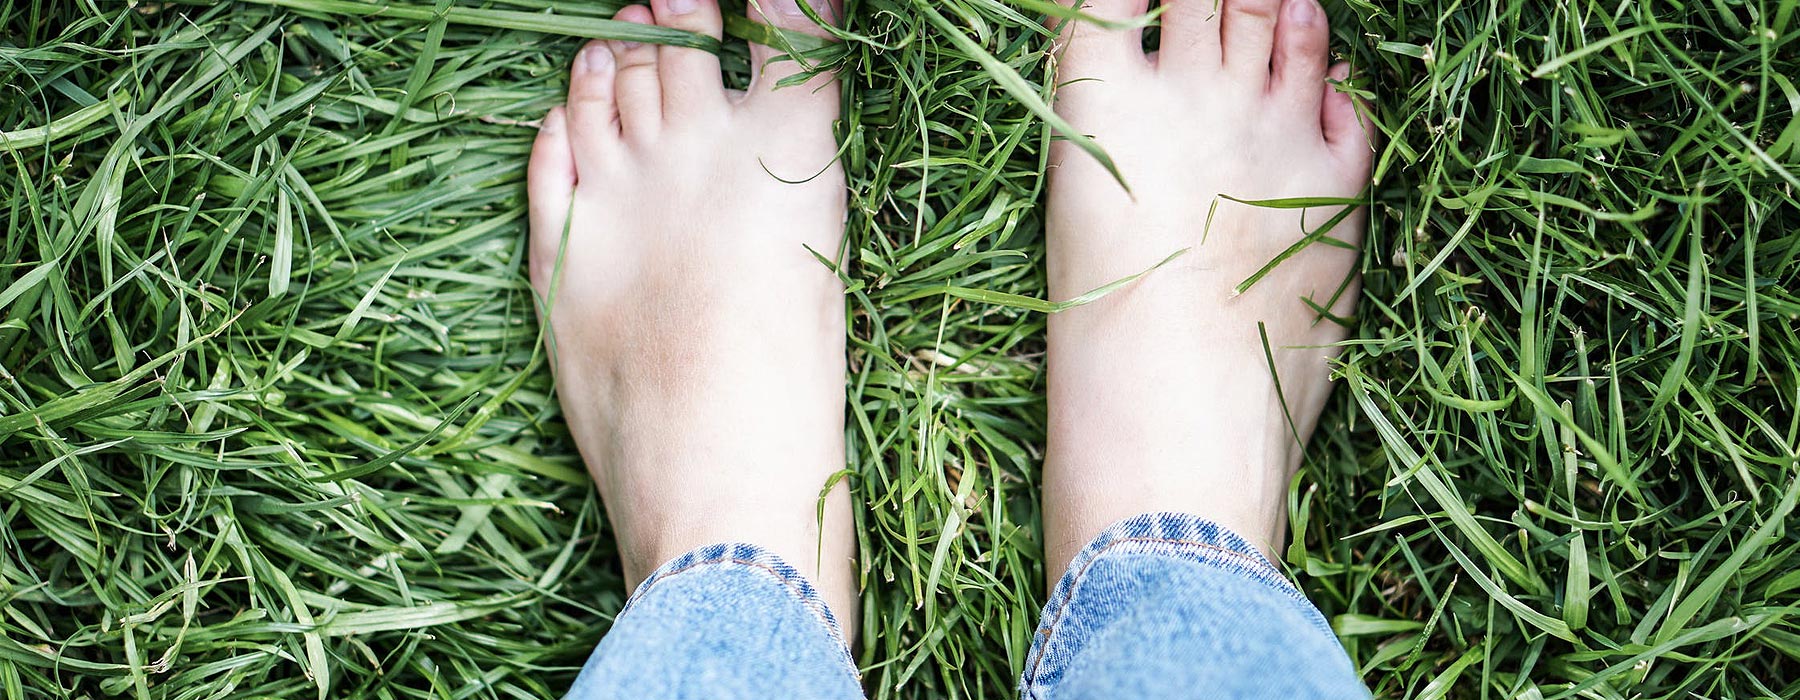 Füße im Rasen